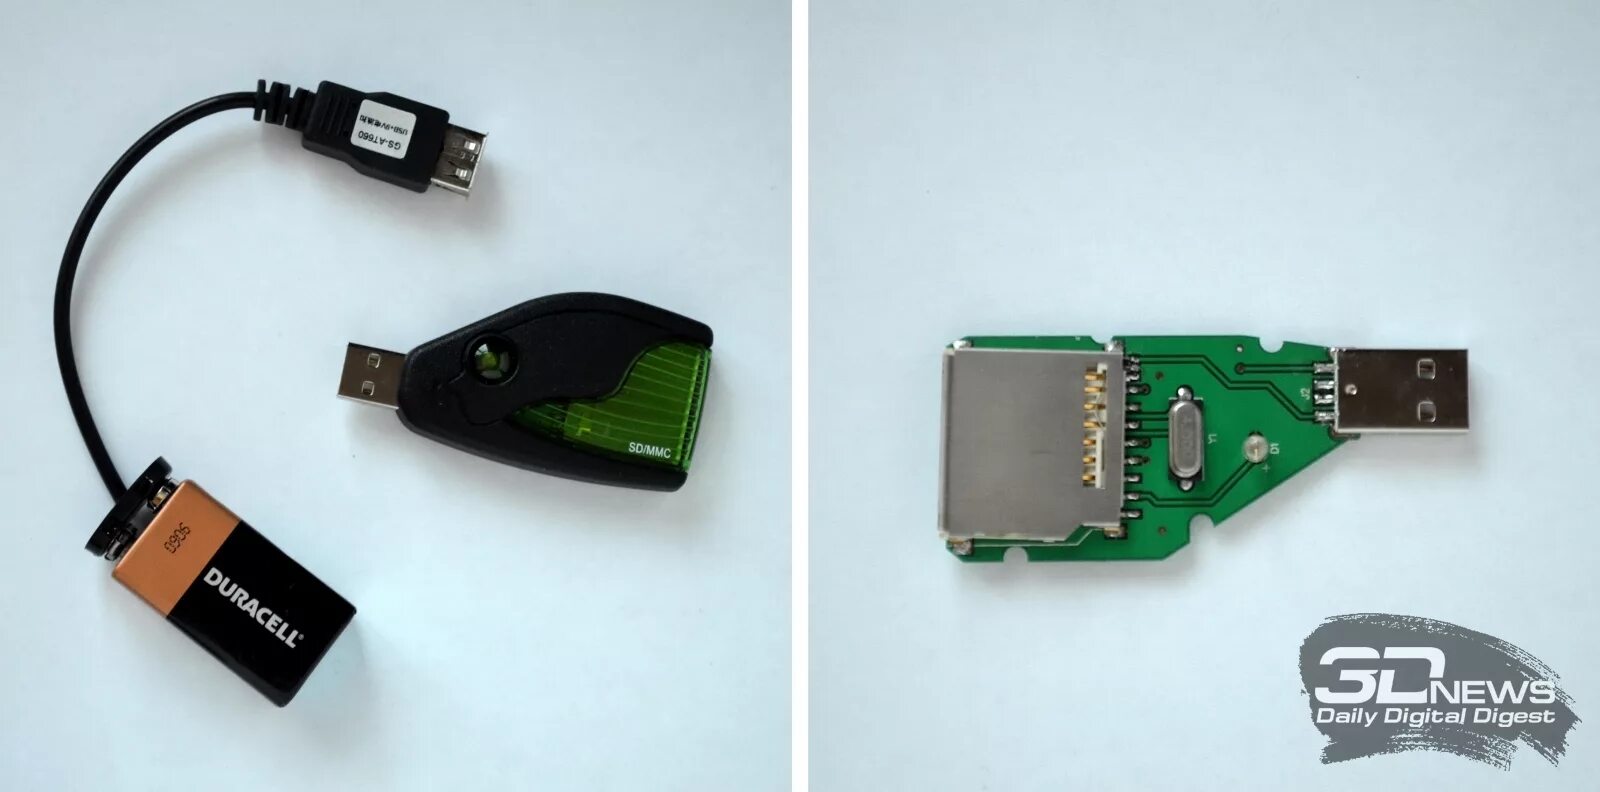 Восстановить данные микро. Переходник с USB флешки на микро SD флешку. Коннектор с микро СД на USB. Переходник с MICROSD на USB для флешки. Флешку микро СД через юсб кабель.